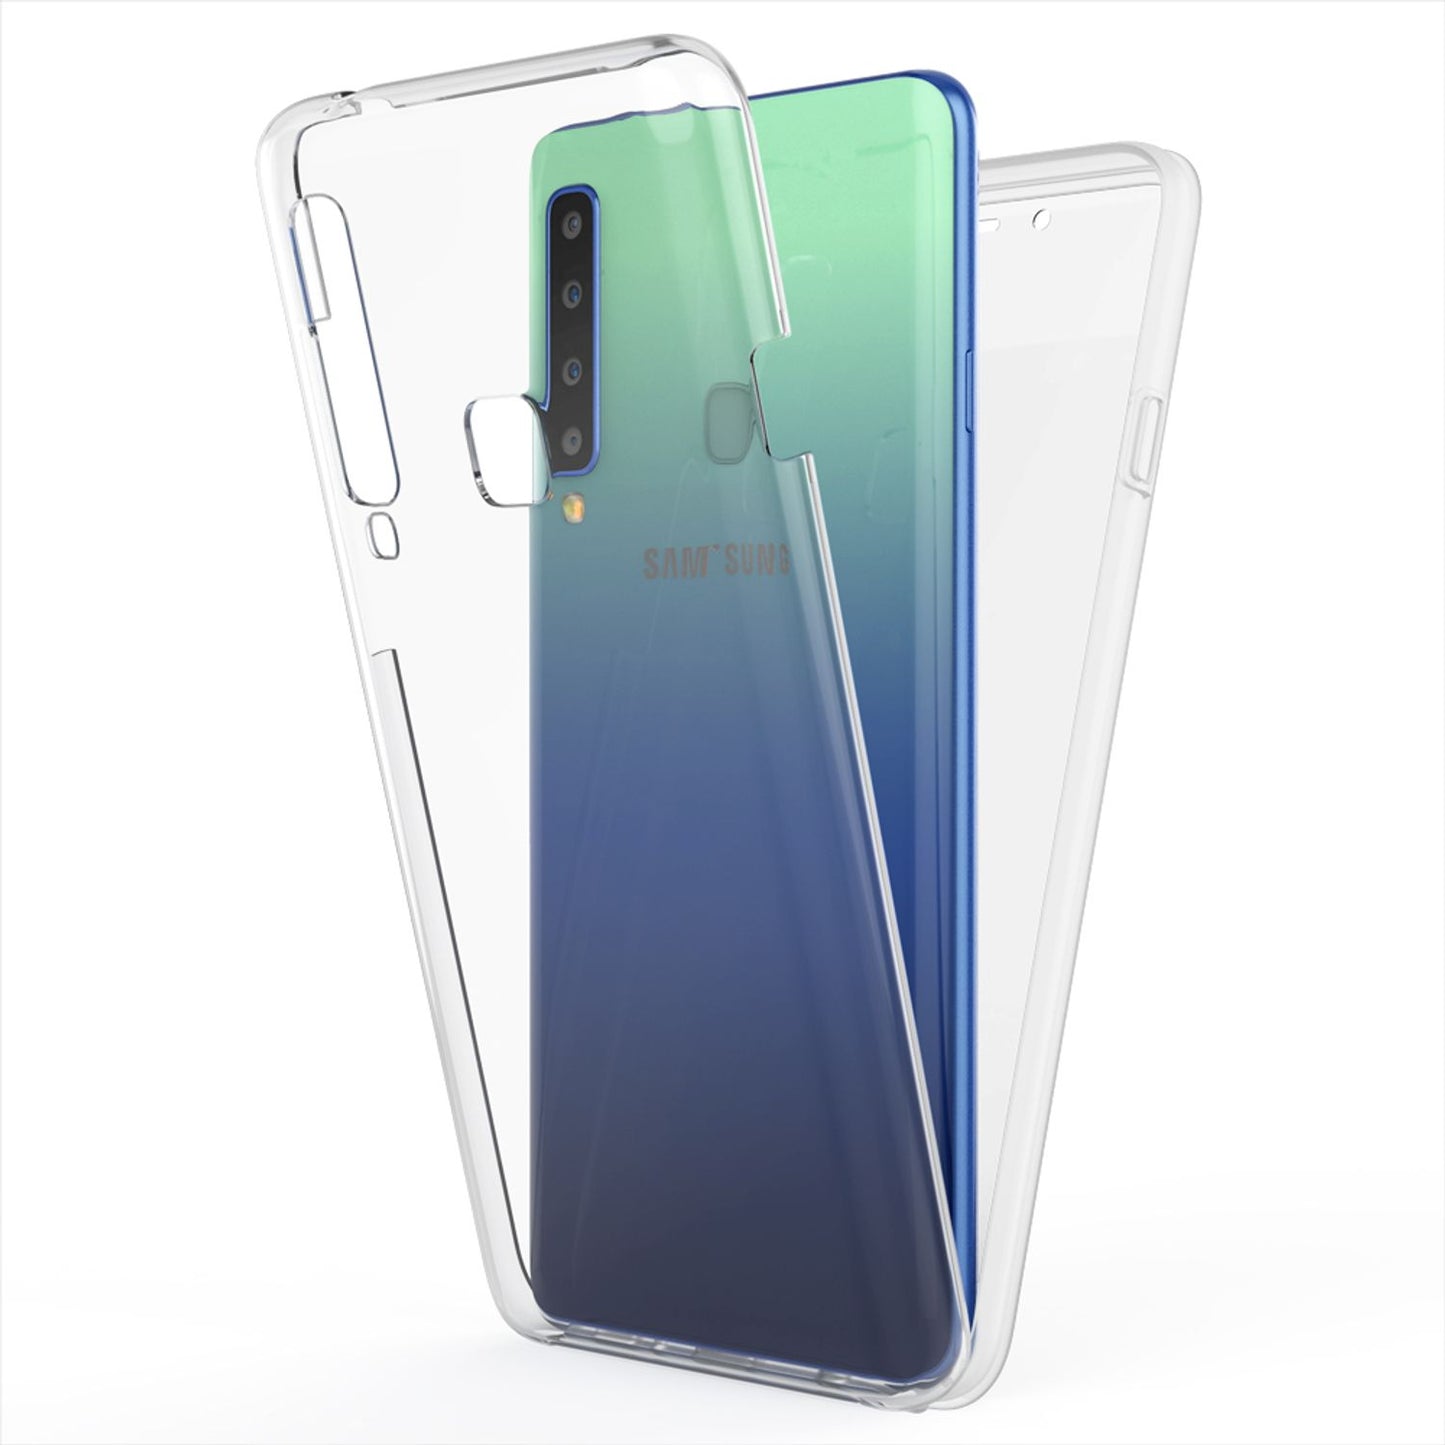 NALIA 360 Grad Handy Hülle für Samsung Galaxy A9 2018, Full Cover Rundum Case